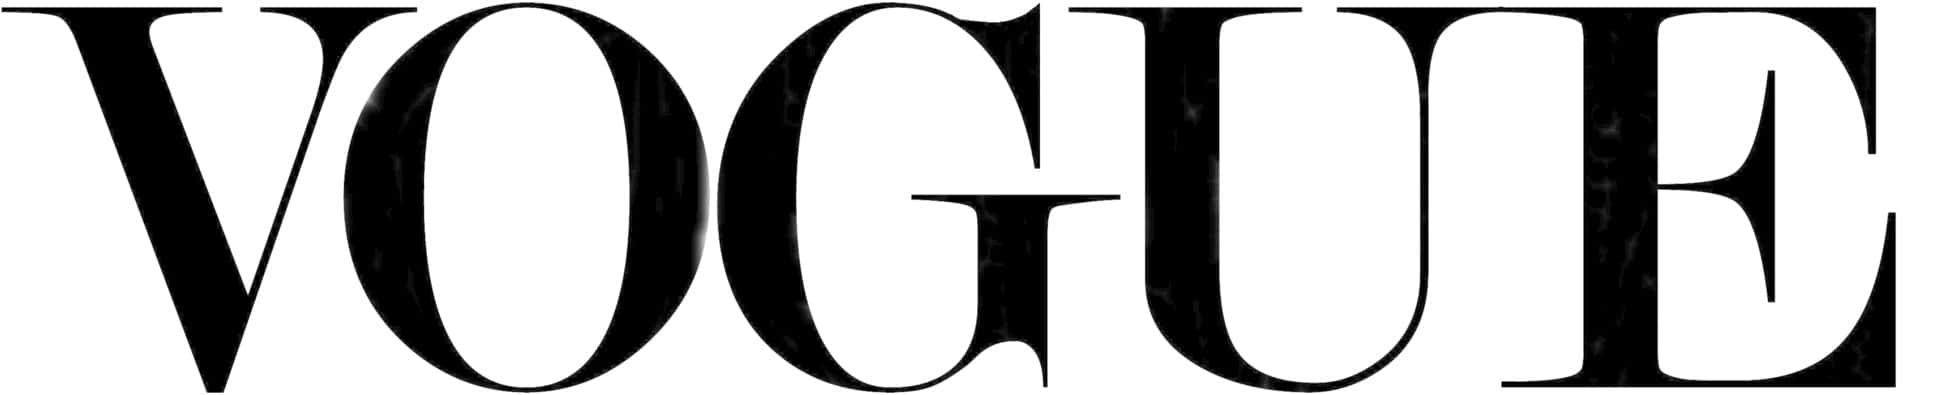 Vogue Magazine Logo Blackand White Wallpaper